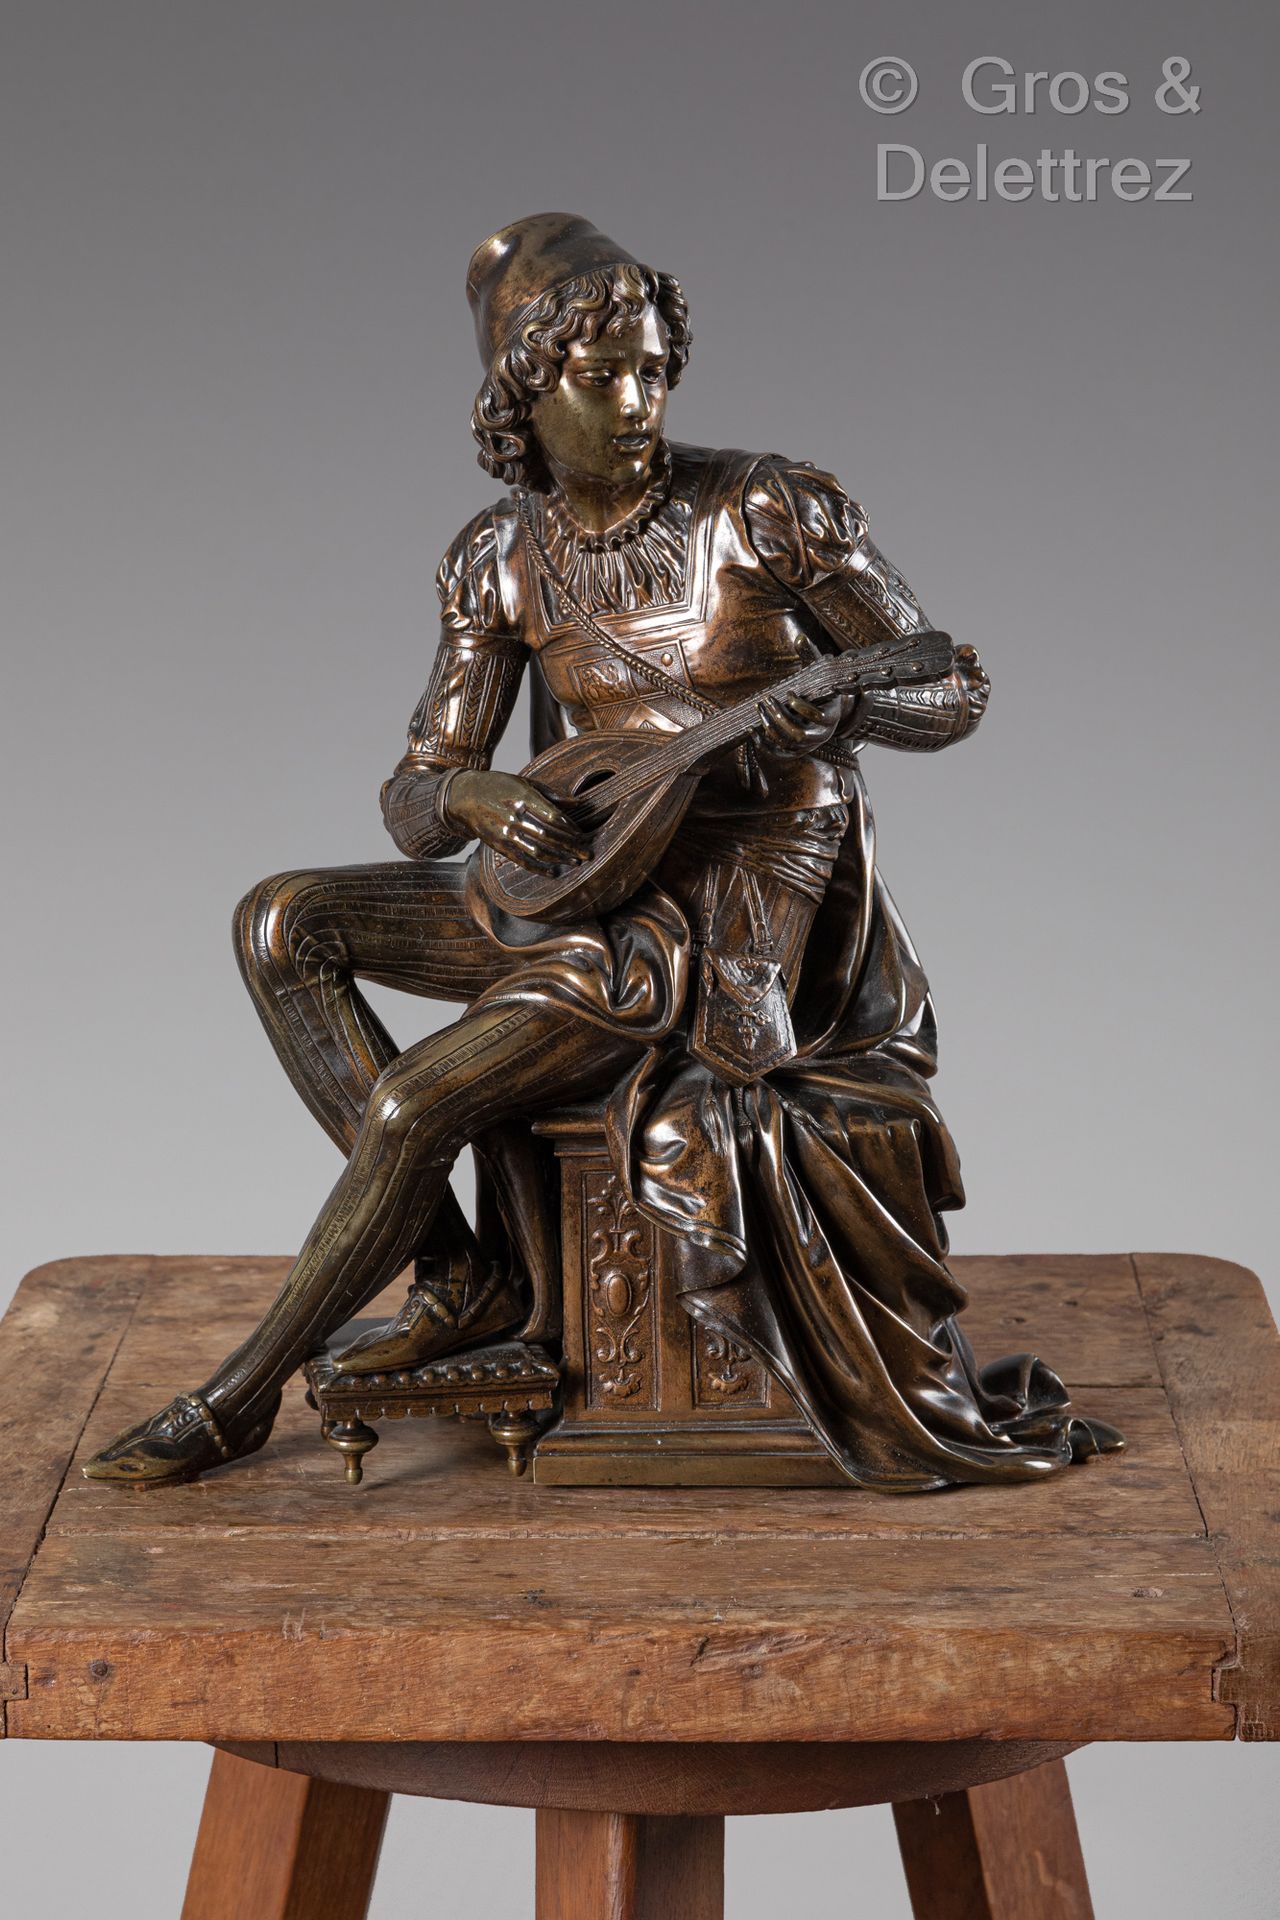 École italienne, seconde moitié du XIXe 年轻的佛罗伦萨人穿着丰富的文艺复兴时期的服装，坐在那里演奏曼陀林。

青铜色，有&hellip;